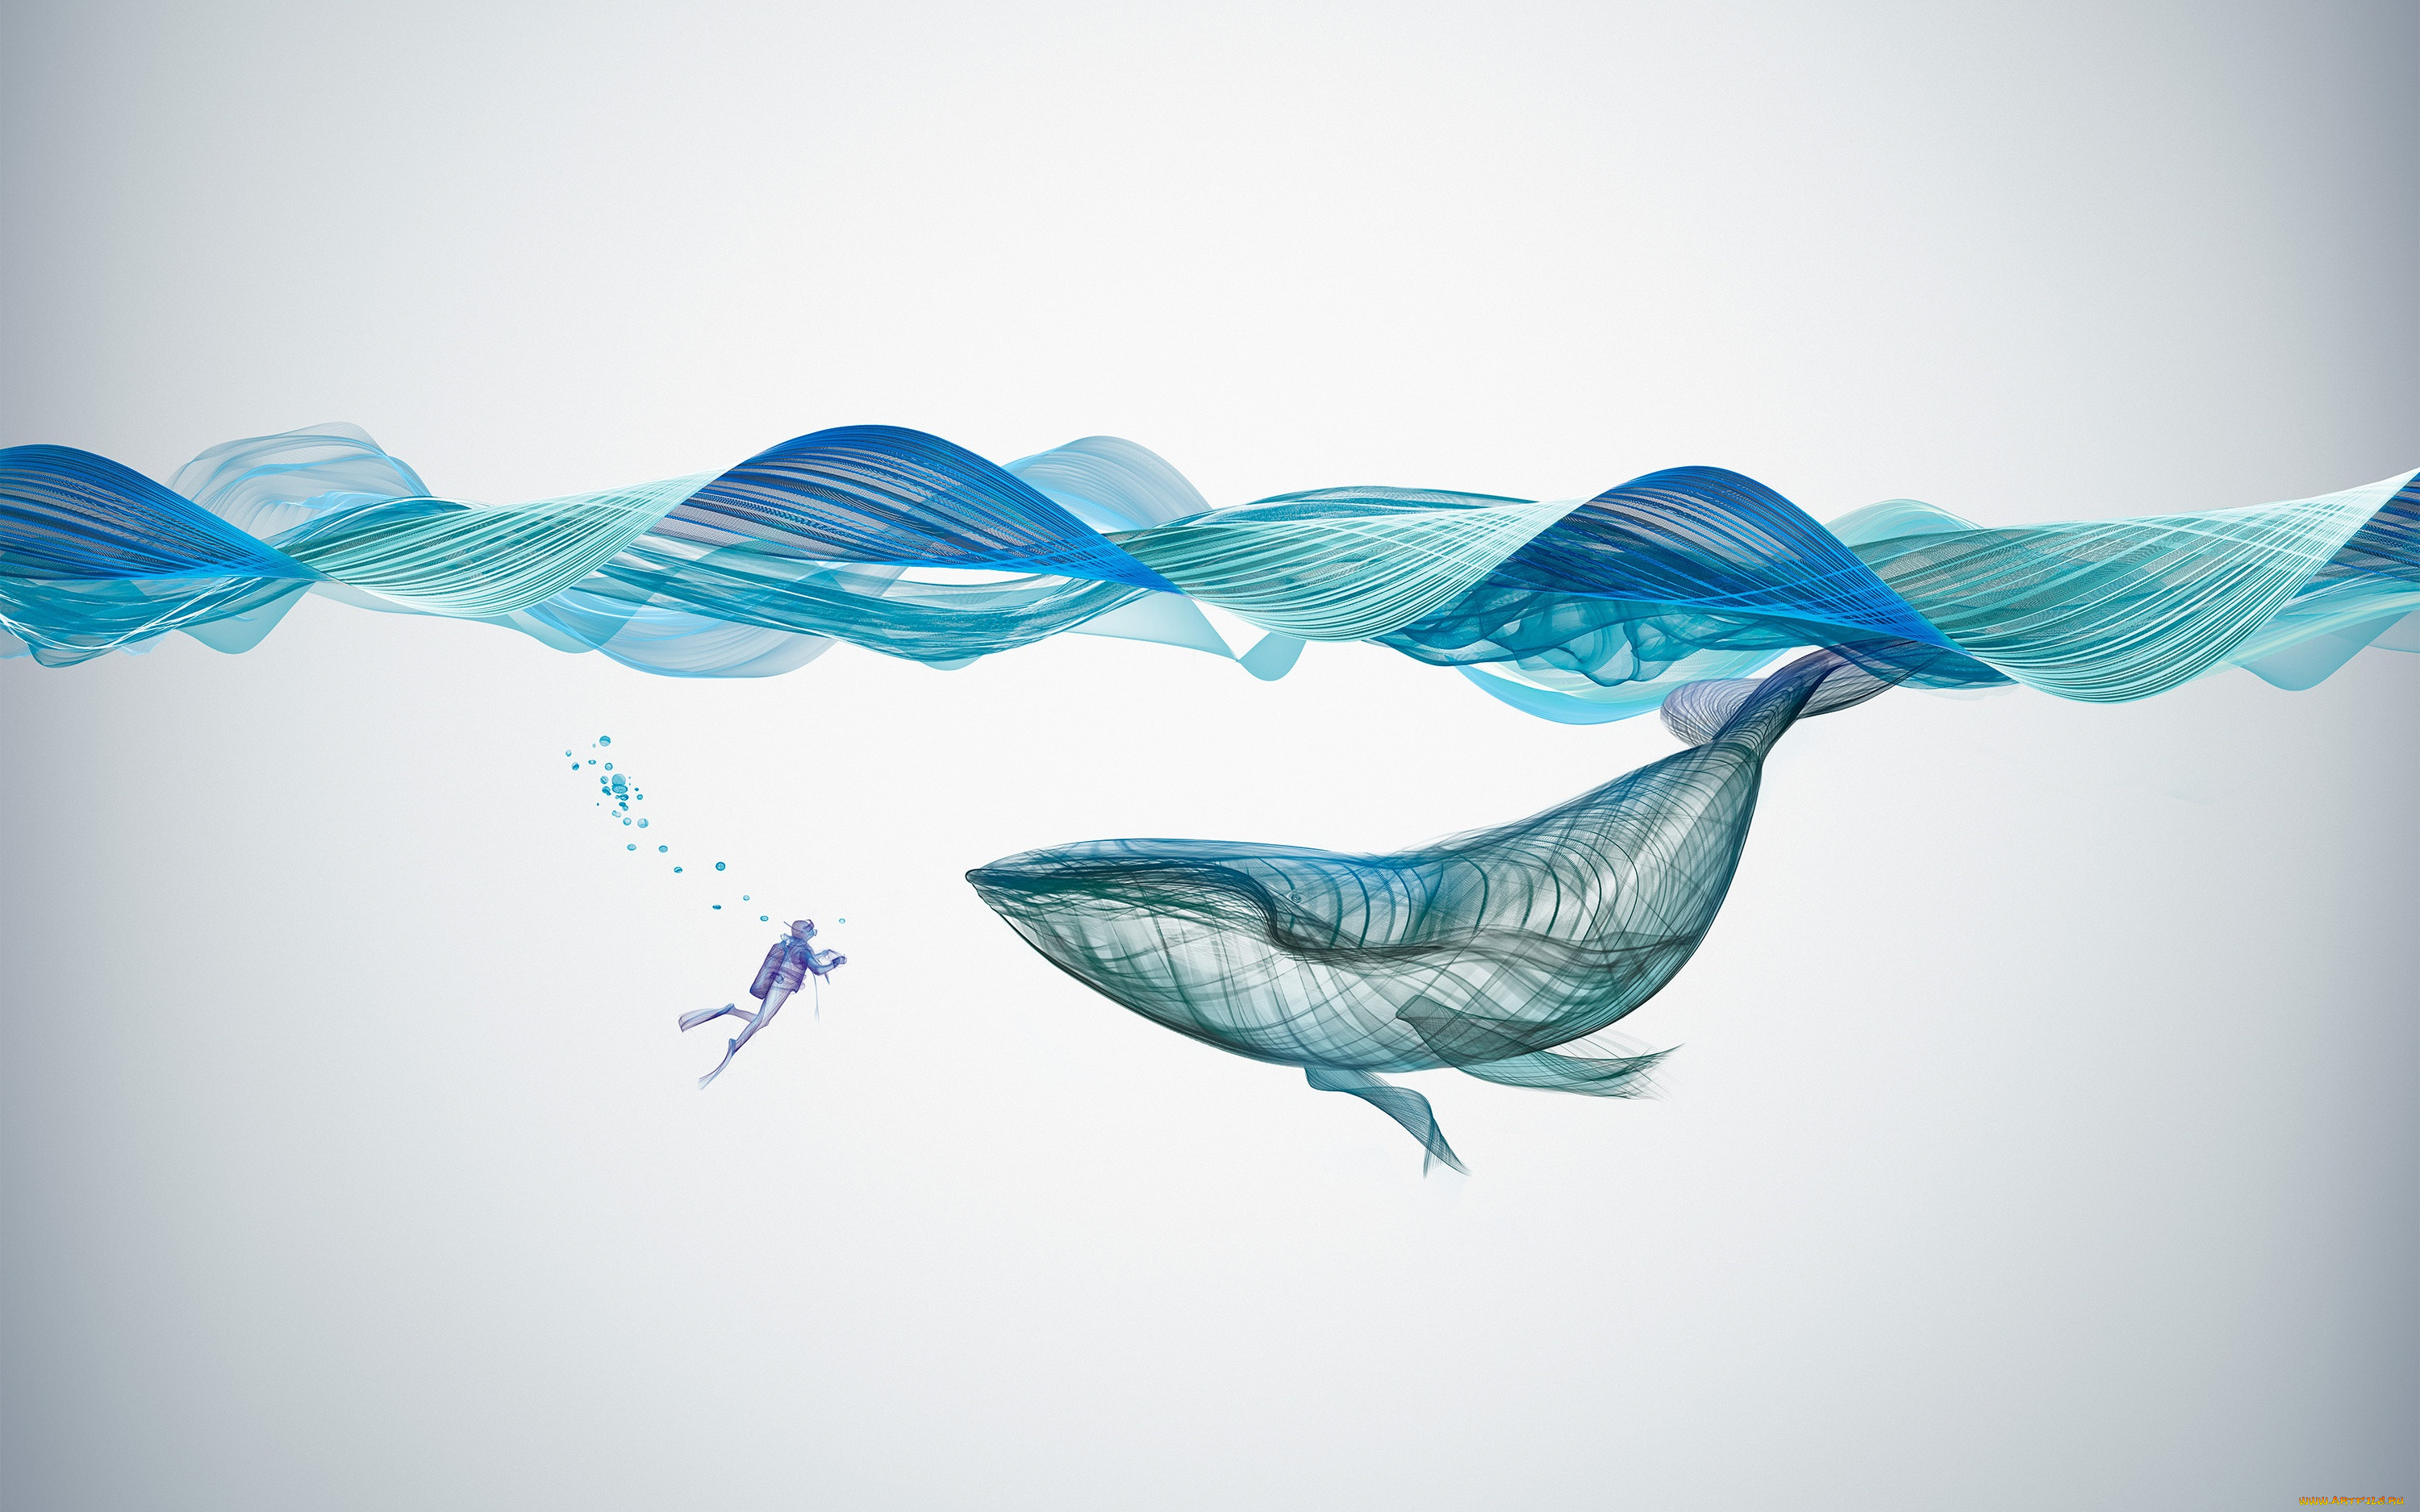  ,  , animals, illustration, creative, graphics, underwater, whale